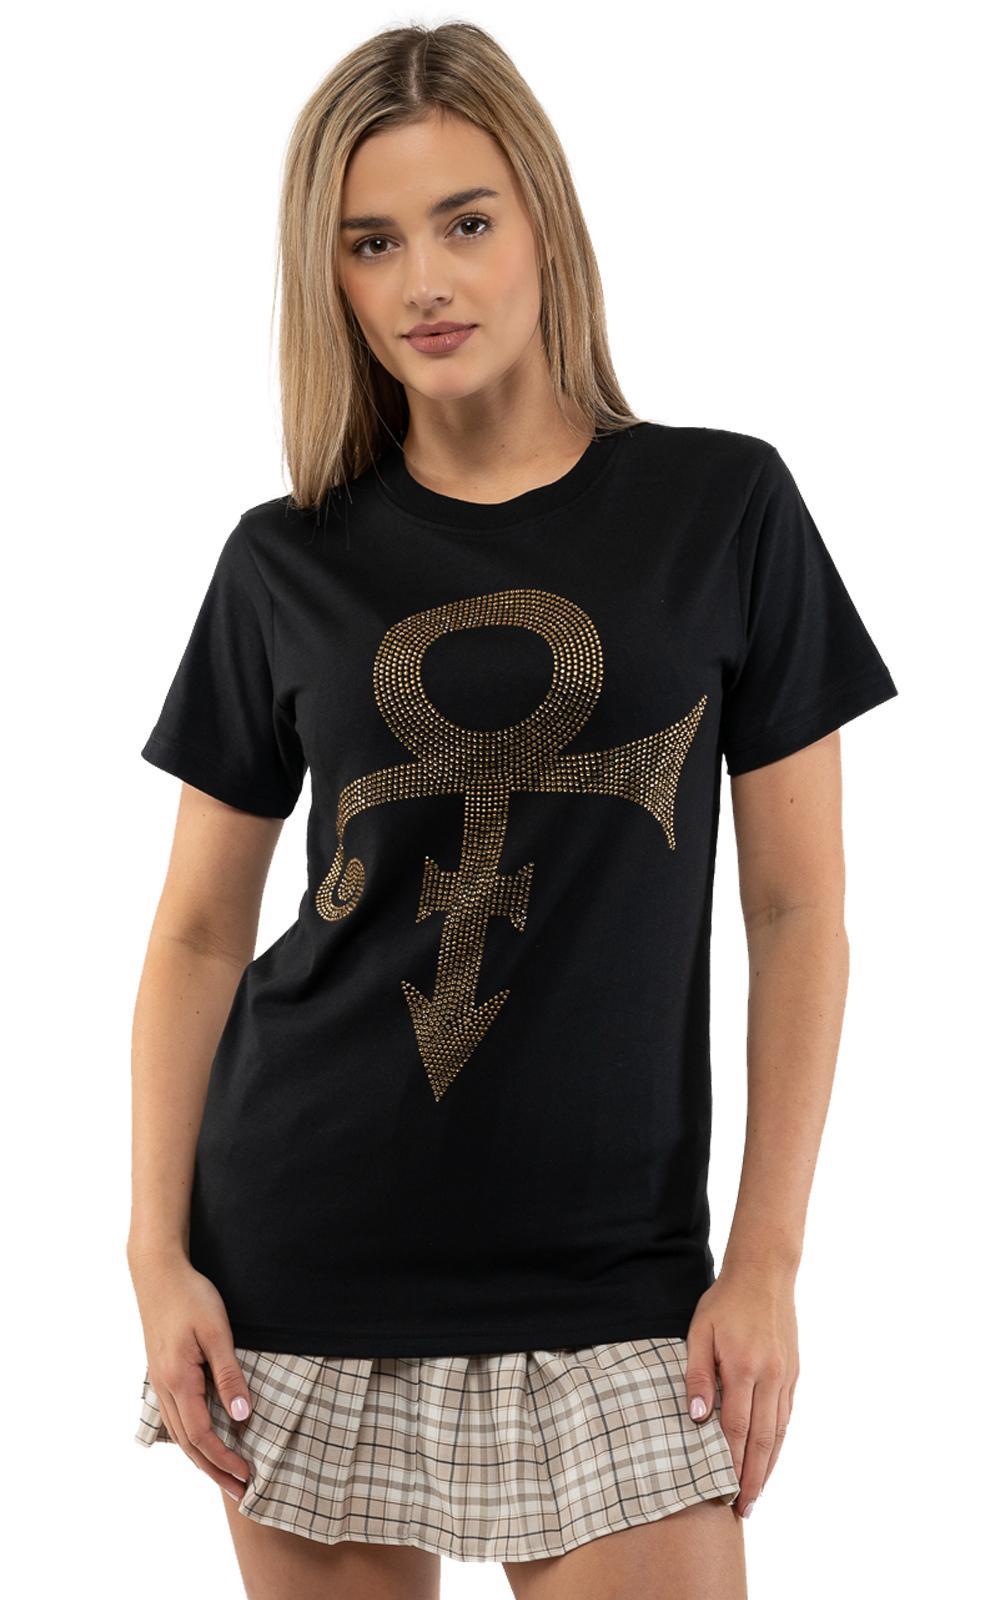 Prince T Shirt Diamante Gold Symbol Logo new Official Unisex Black